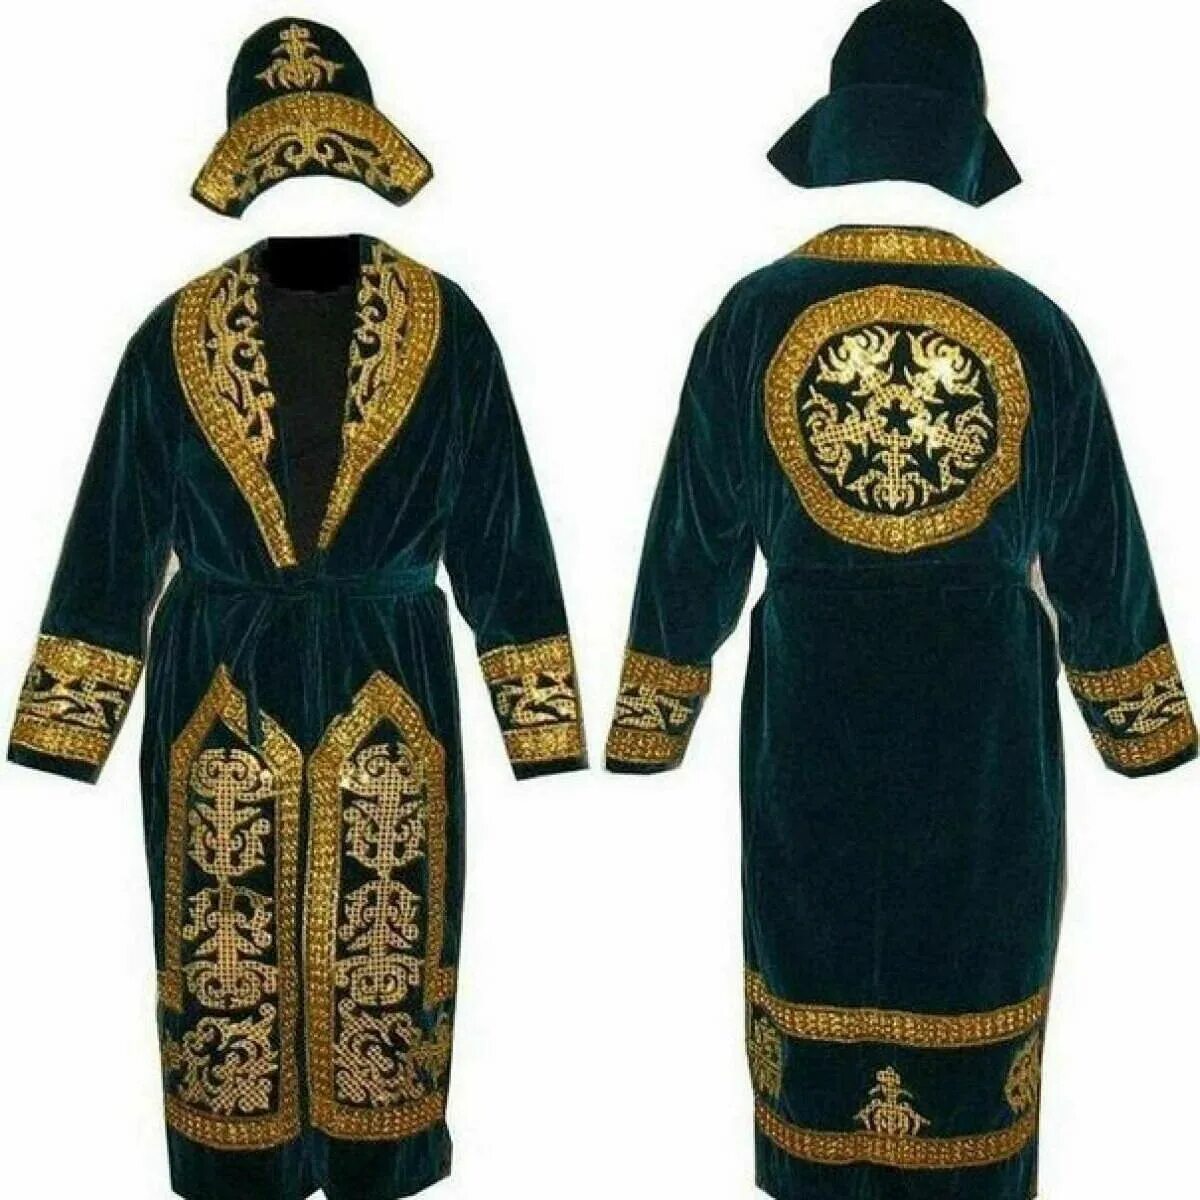 Чапан казахский. Шапан (чапан). Казахи национальный костюм шапан. Шапан казахская одежда мужская. Казахский национальный костюм чапан.